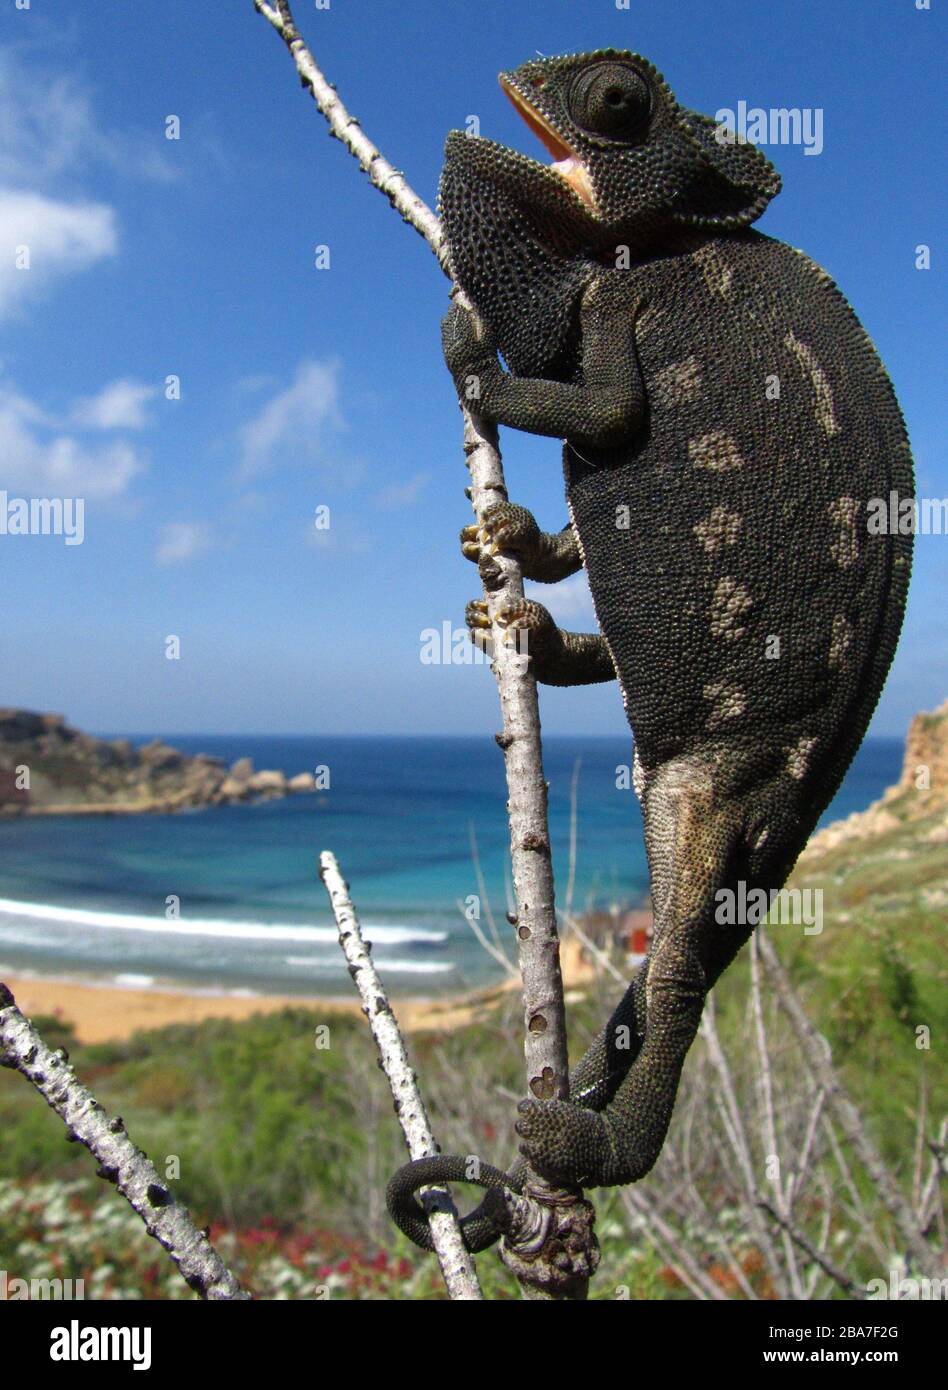 Vertical closeup of a common chameleon on a tree branch in Ghajn Tuffieha Bay in Malta Stock Photo